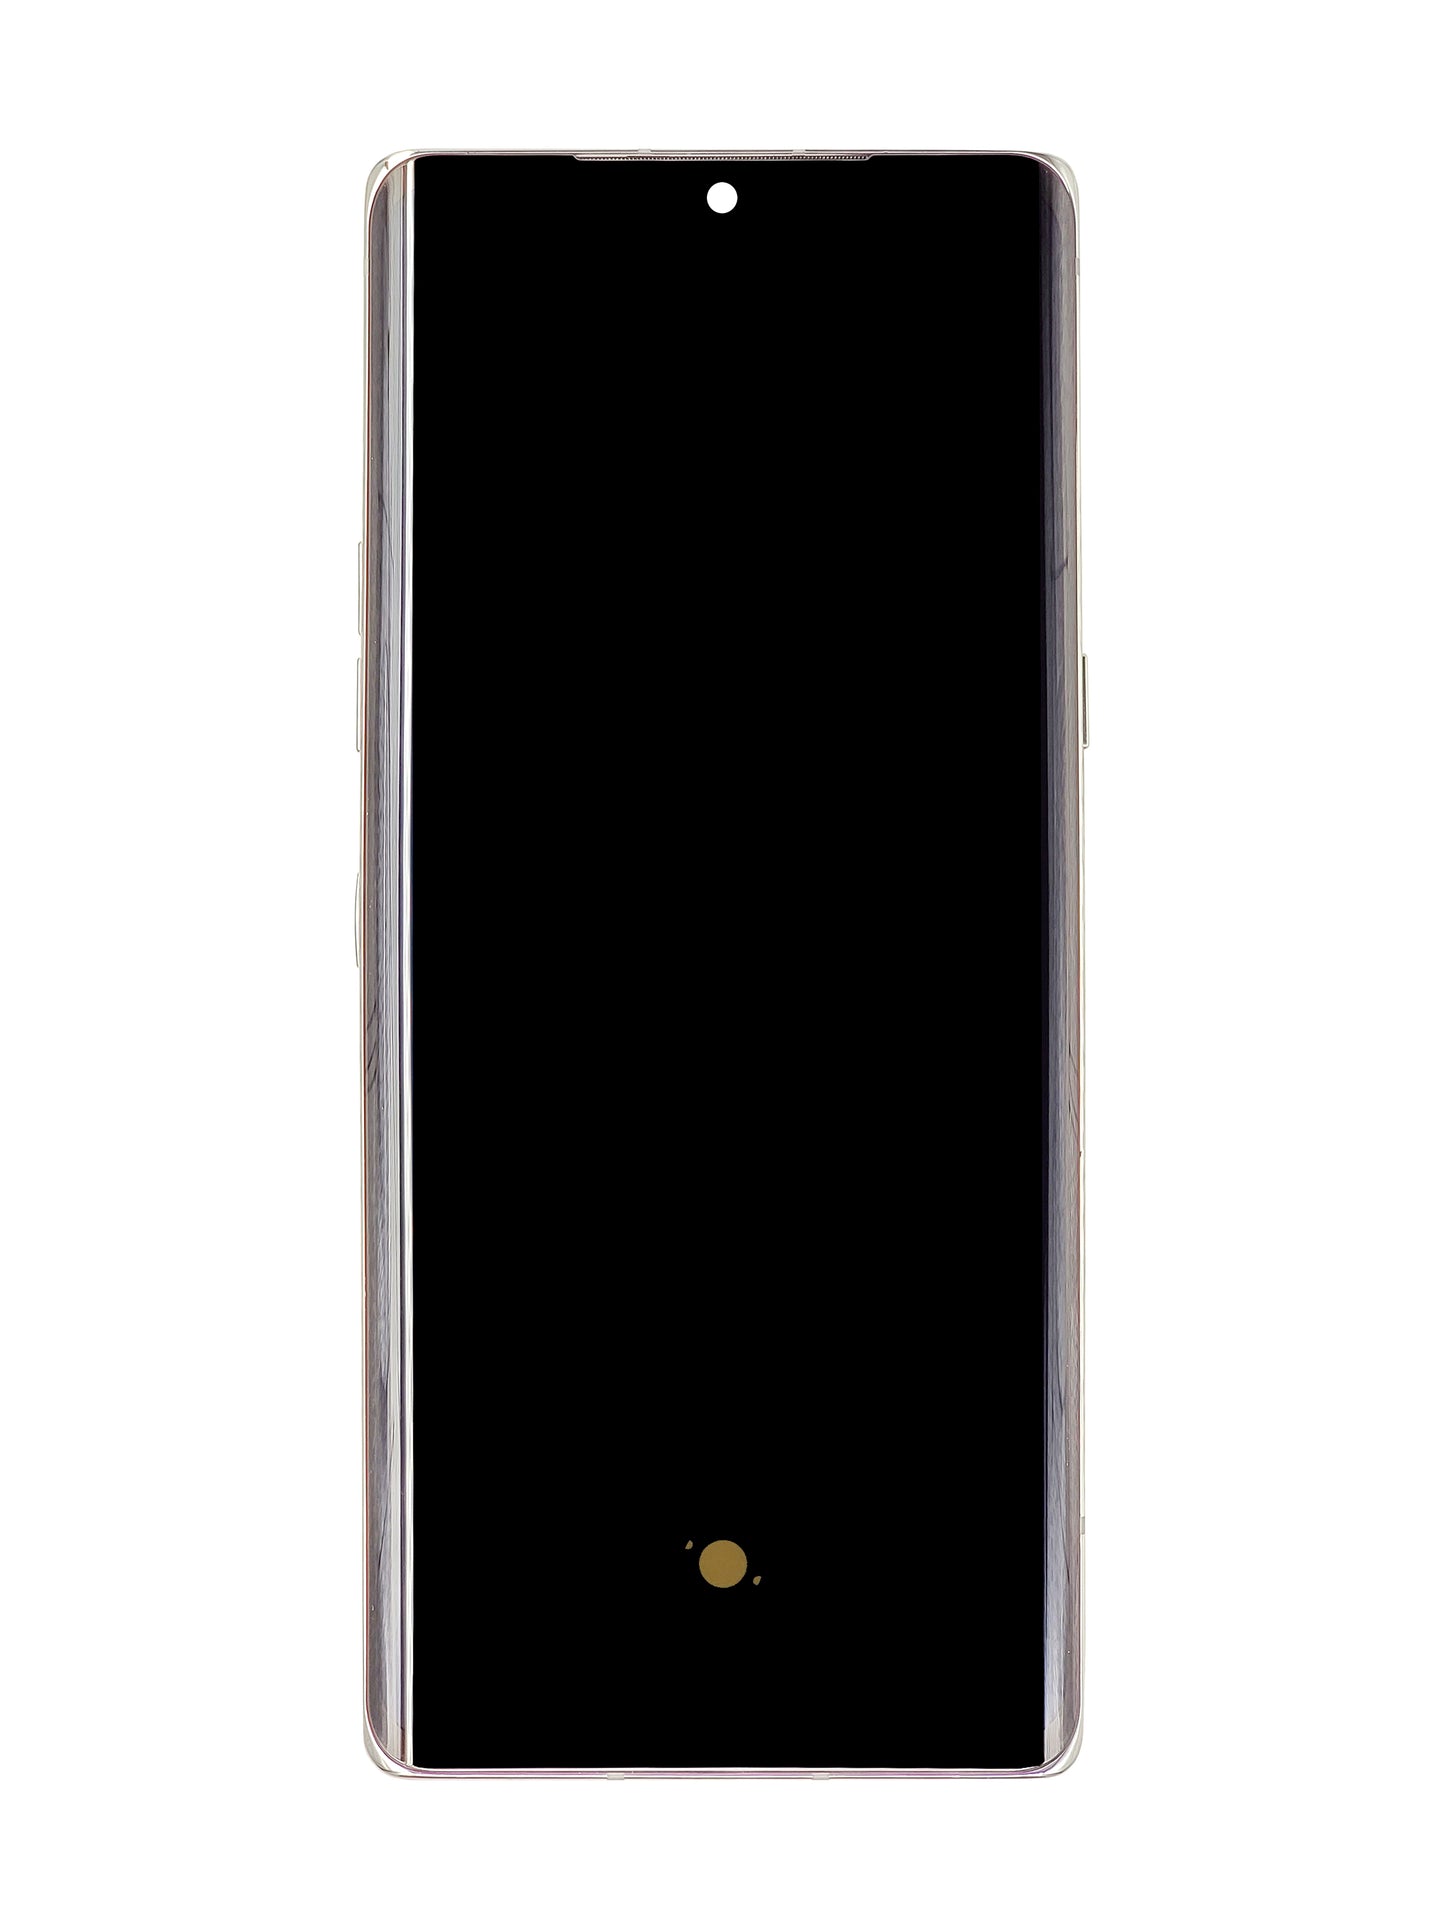 LGV Velvet 5G (Non-Verizon Version) Screen Assembly (With The Frame) (Refurbished) (Silver)